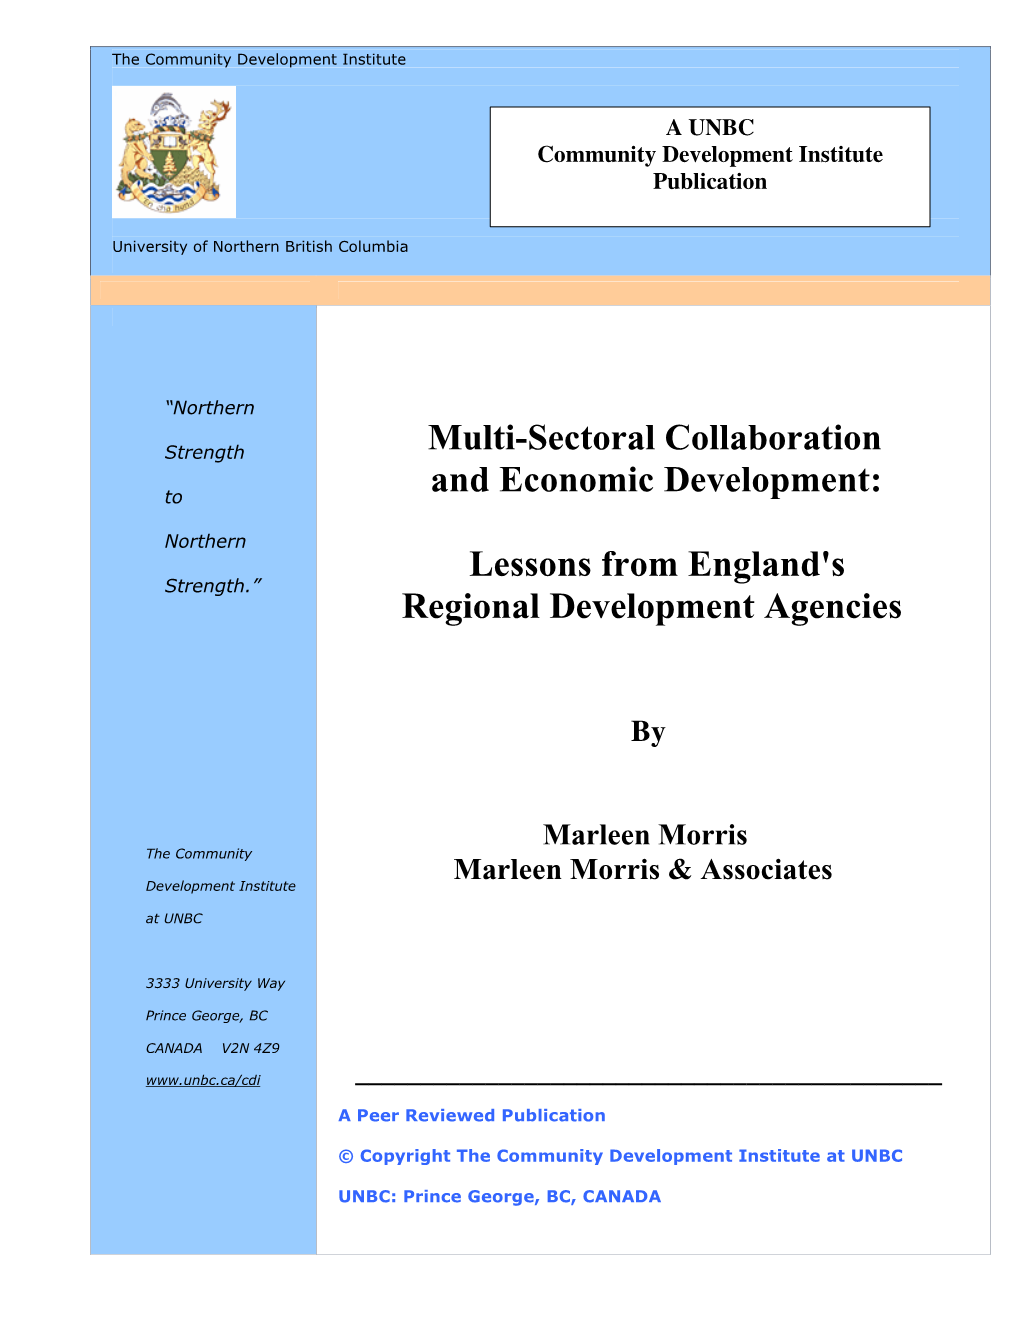 Multi-Sectoral Collaboration and Economic Development: Lessons